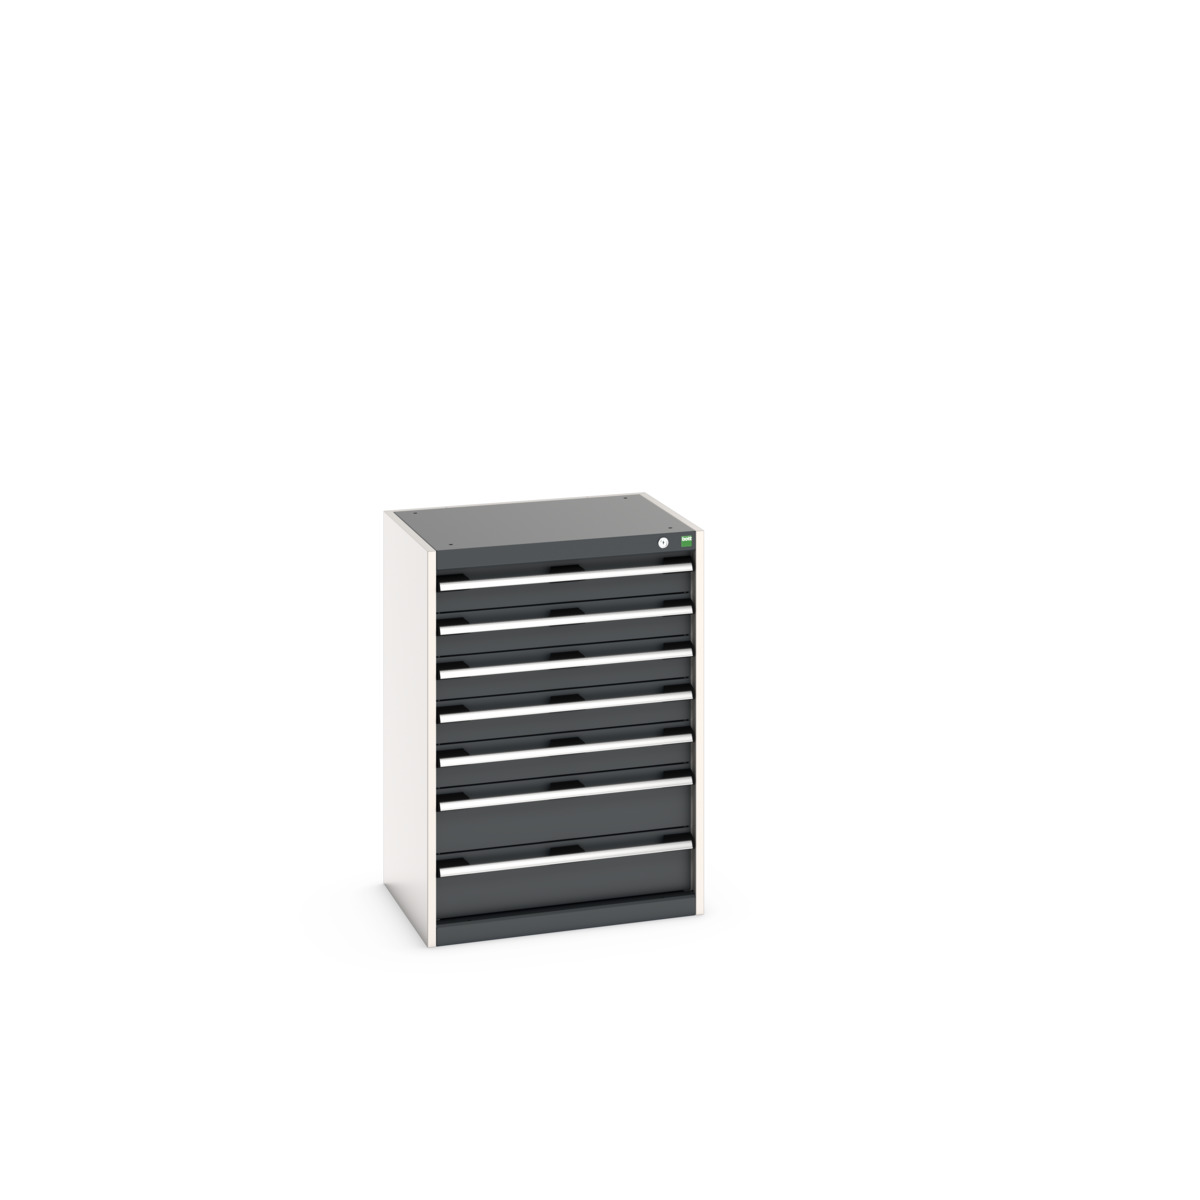 40011051. - cubio drawer cabinet